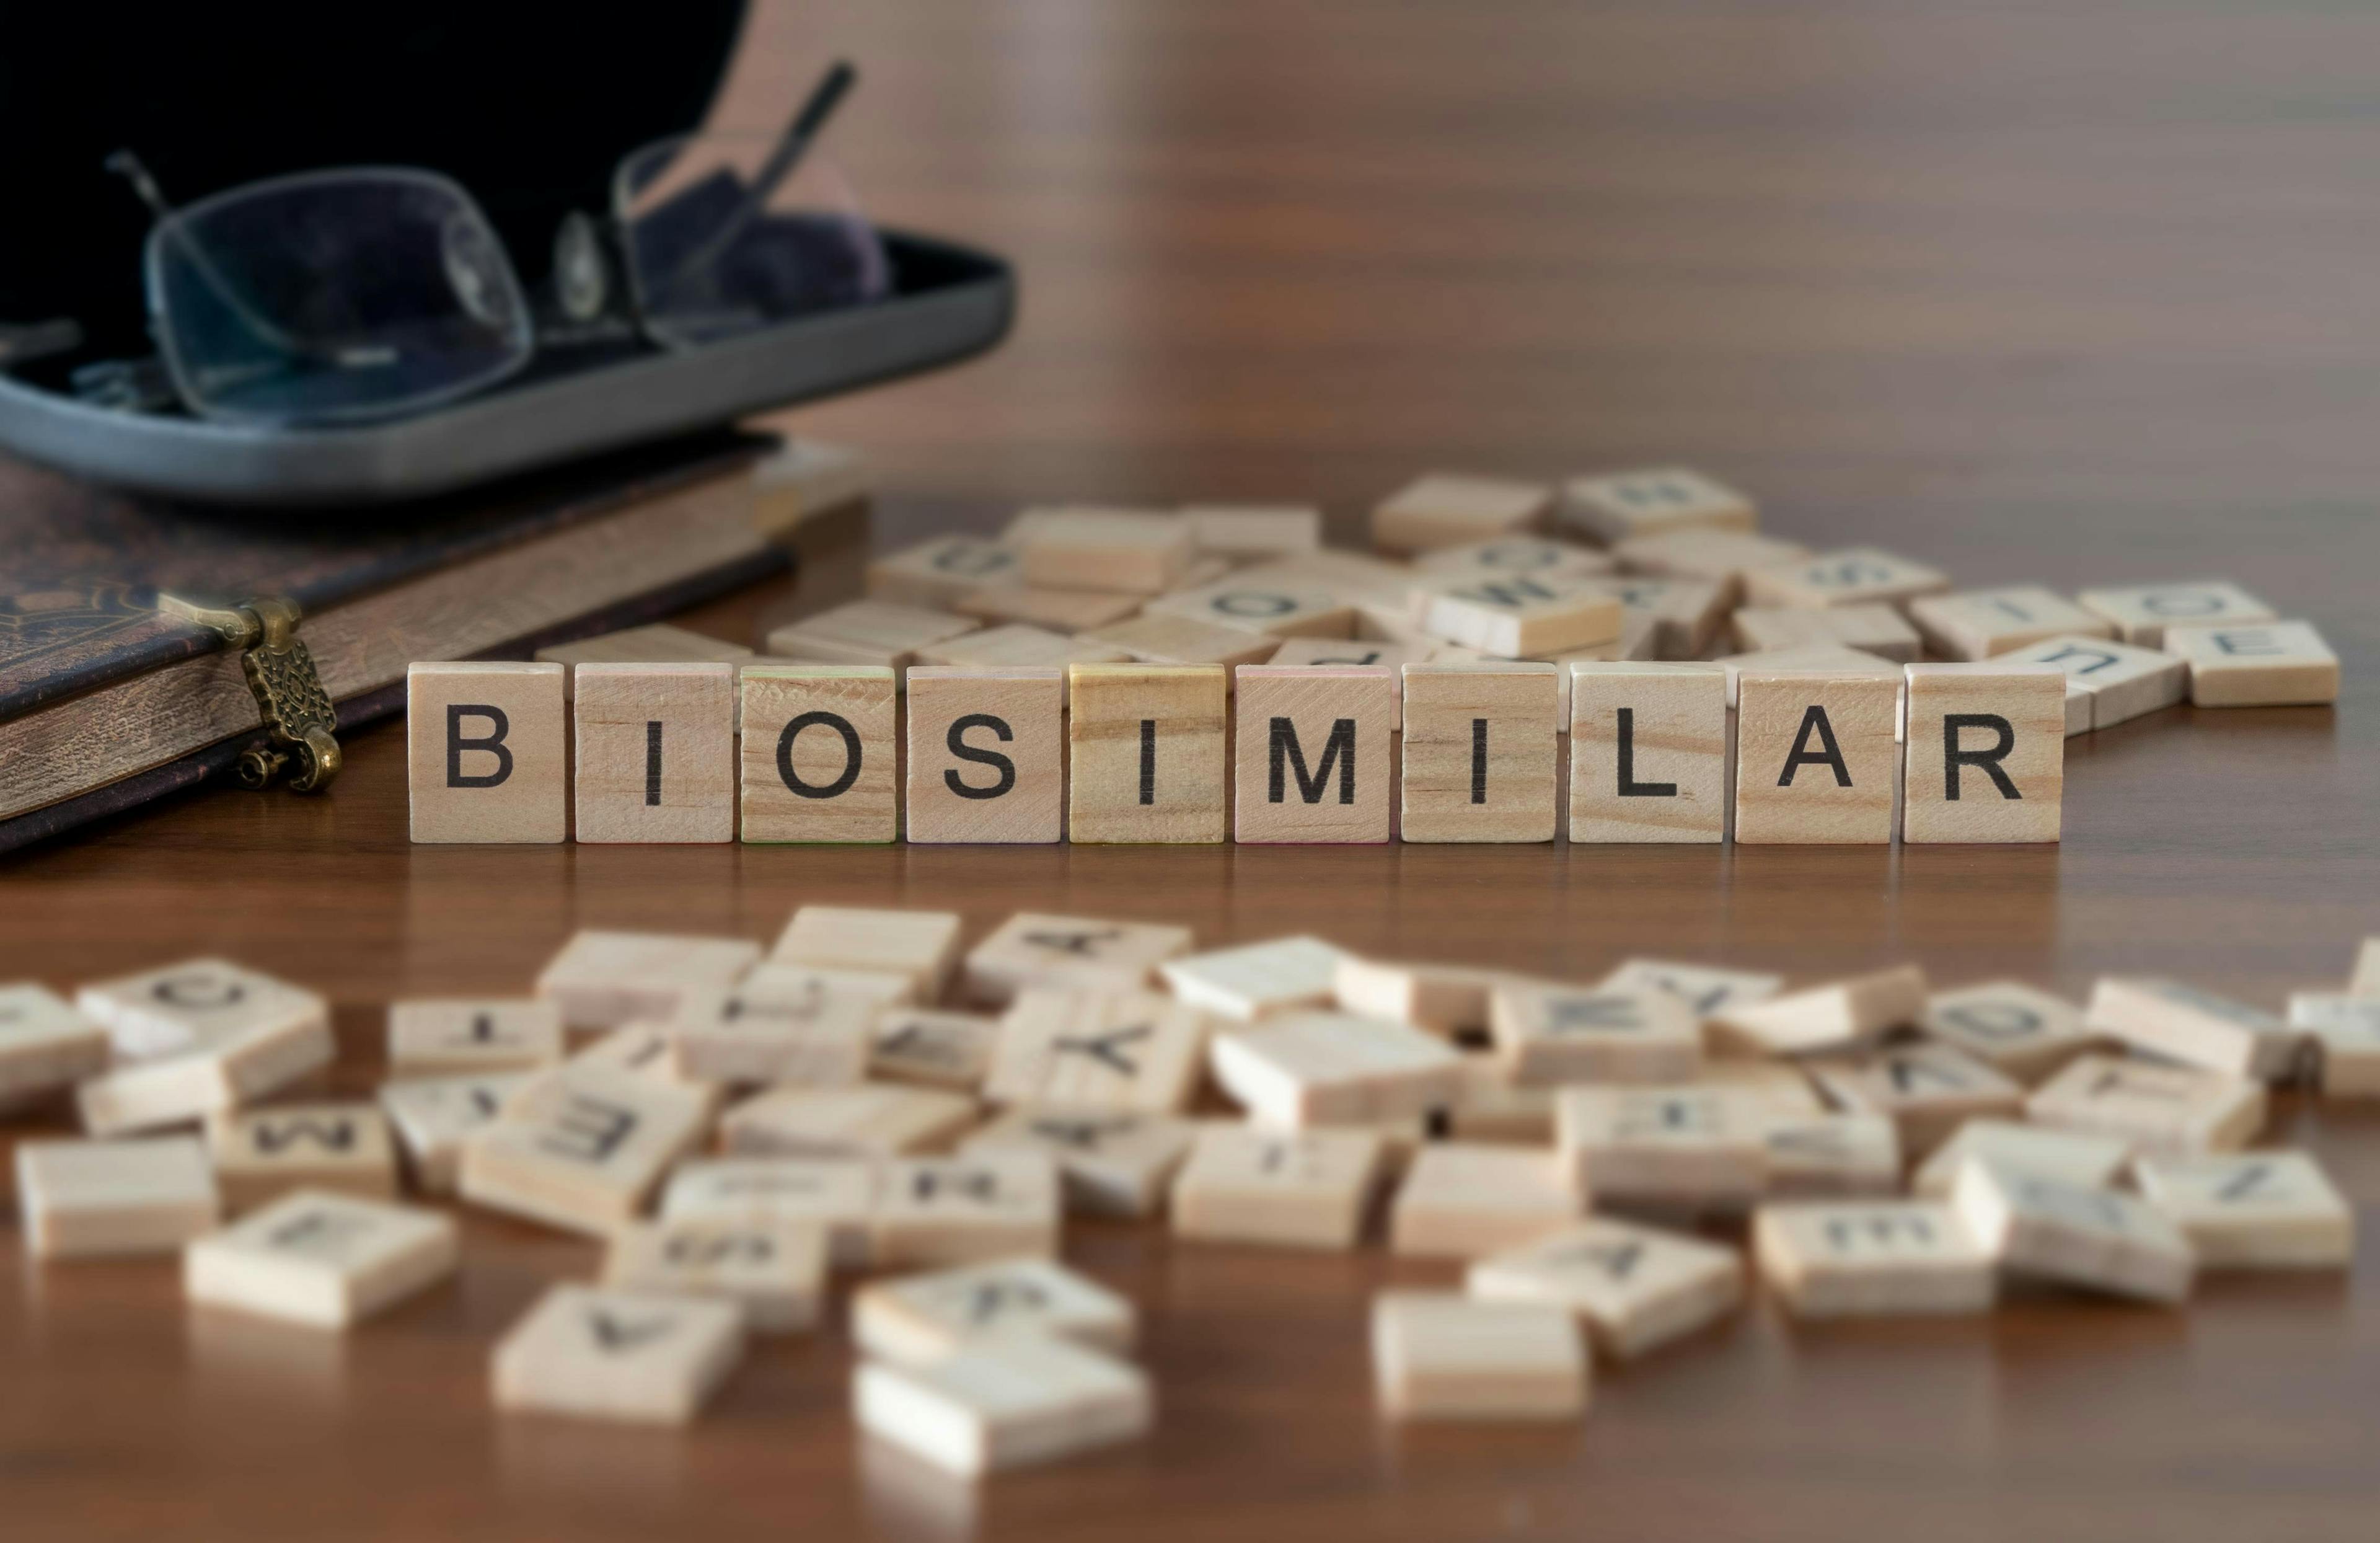 'Biosimilar' spelled in wooden tiles / lexiconimages - stock.adobe.com